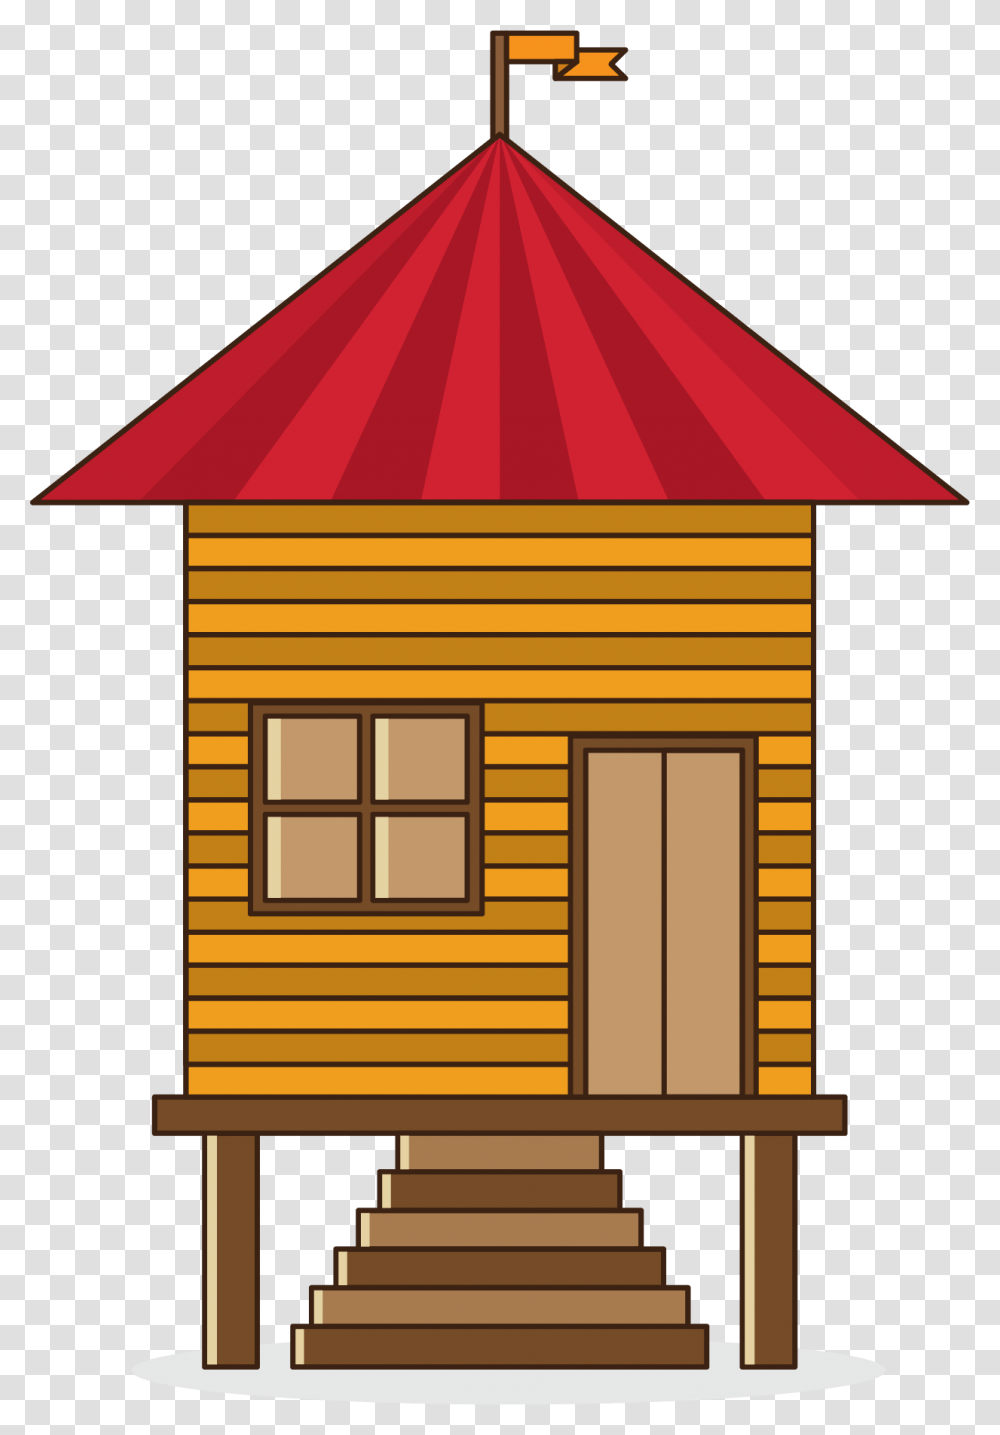 Kisspng Cartoon Clip Art Red Roof Forest Hut Clip Art, Housing, Building, Cabin, House Transparent Png